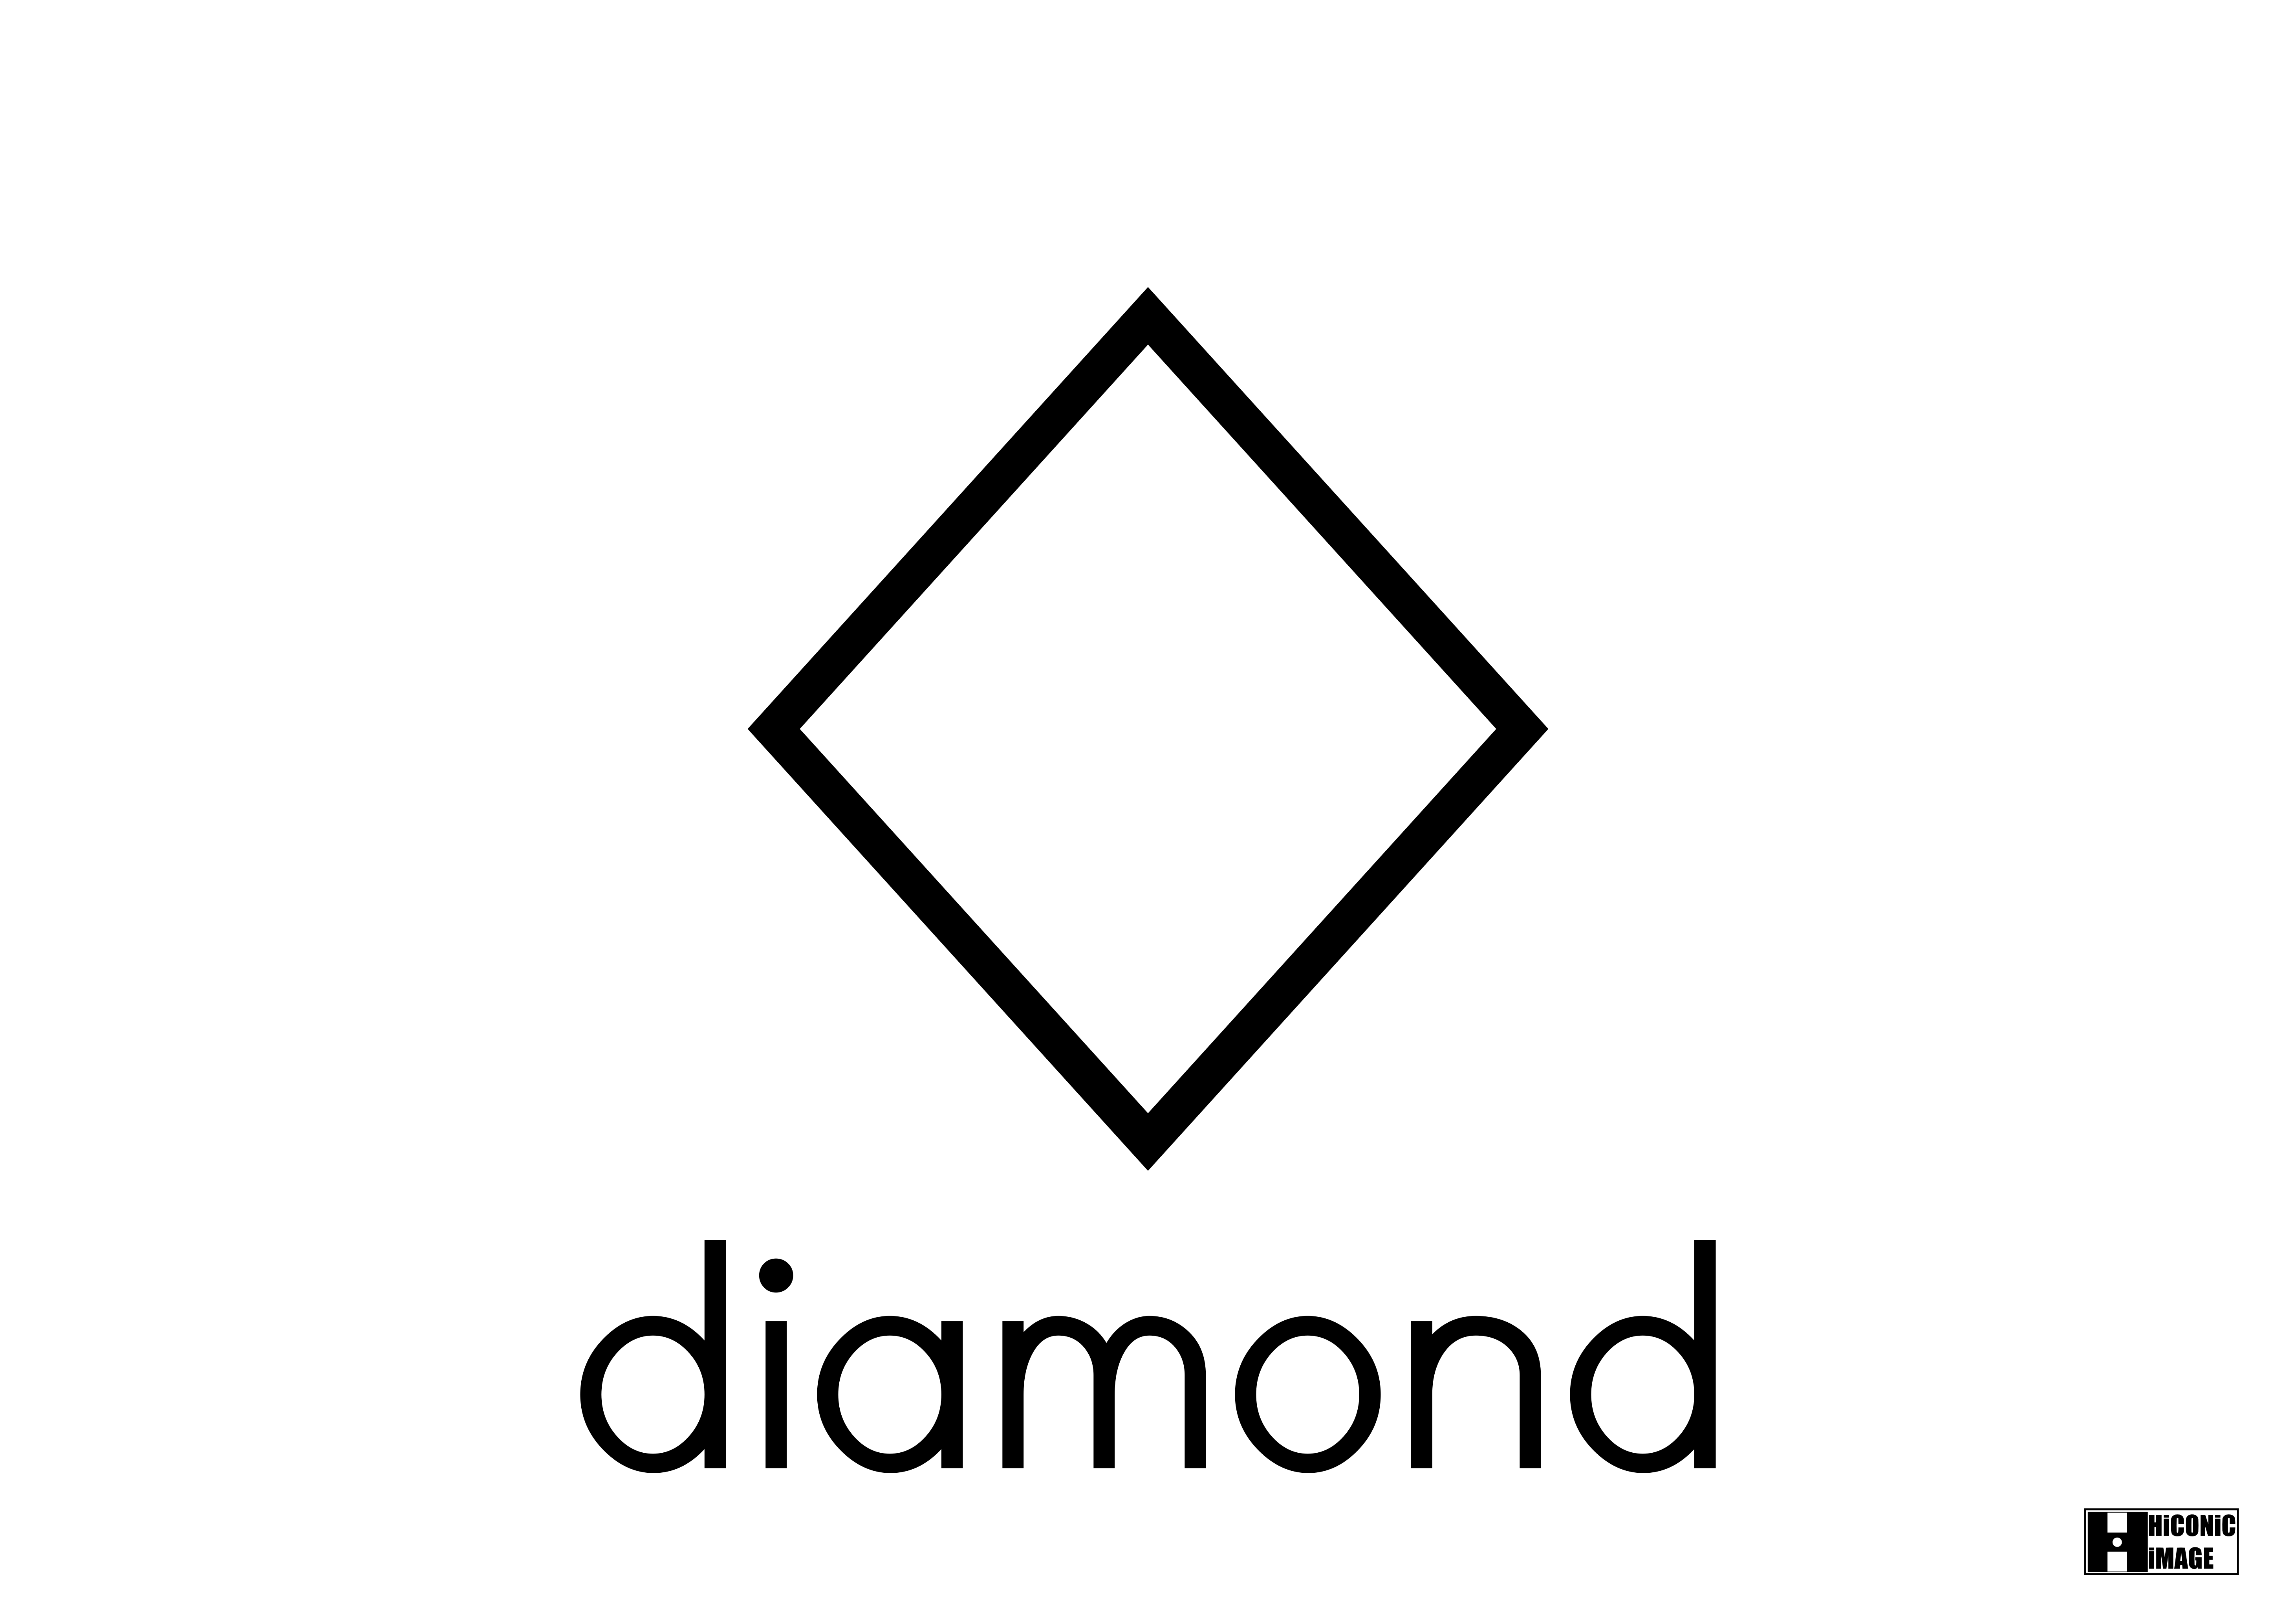 4. "Tumblr Nail Art Inspiration: Diamond Shapes" - wide 6